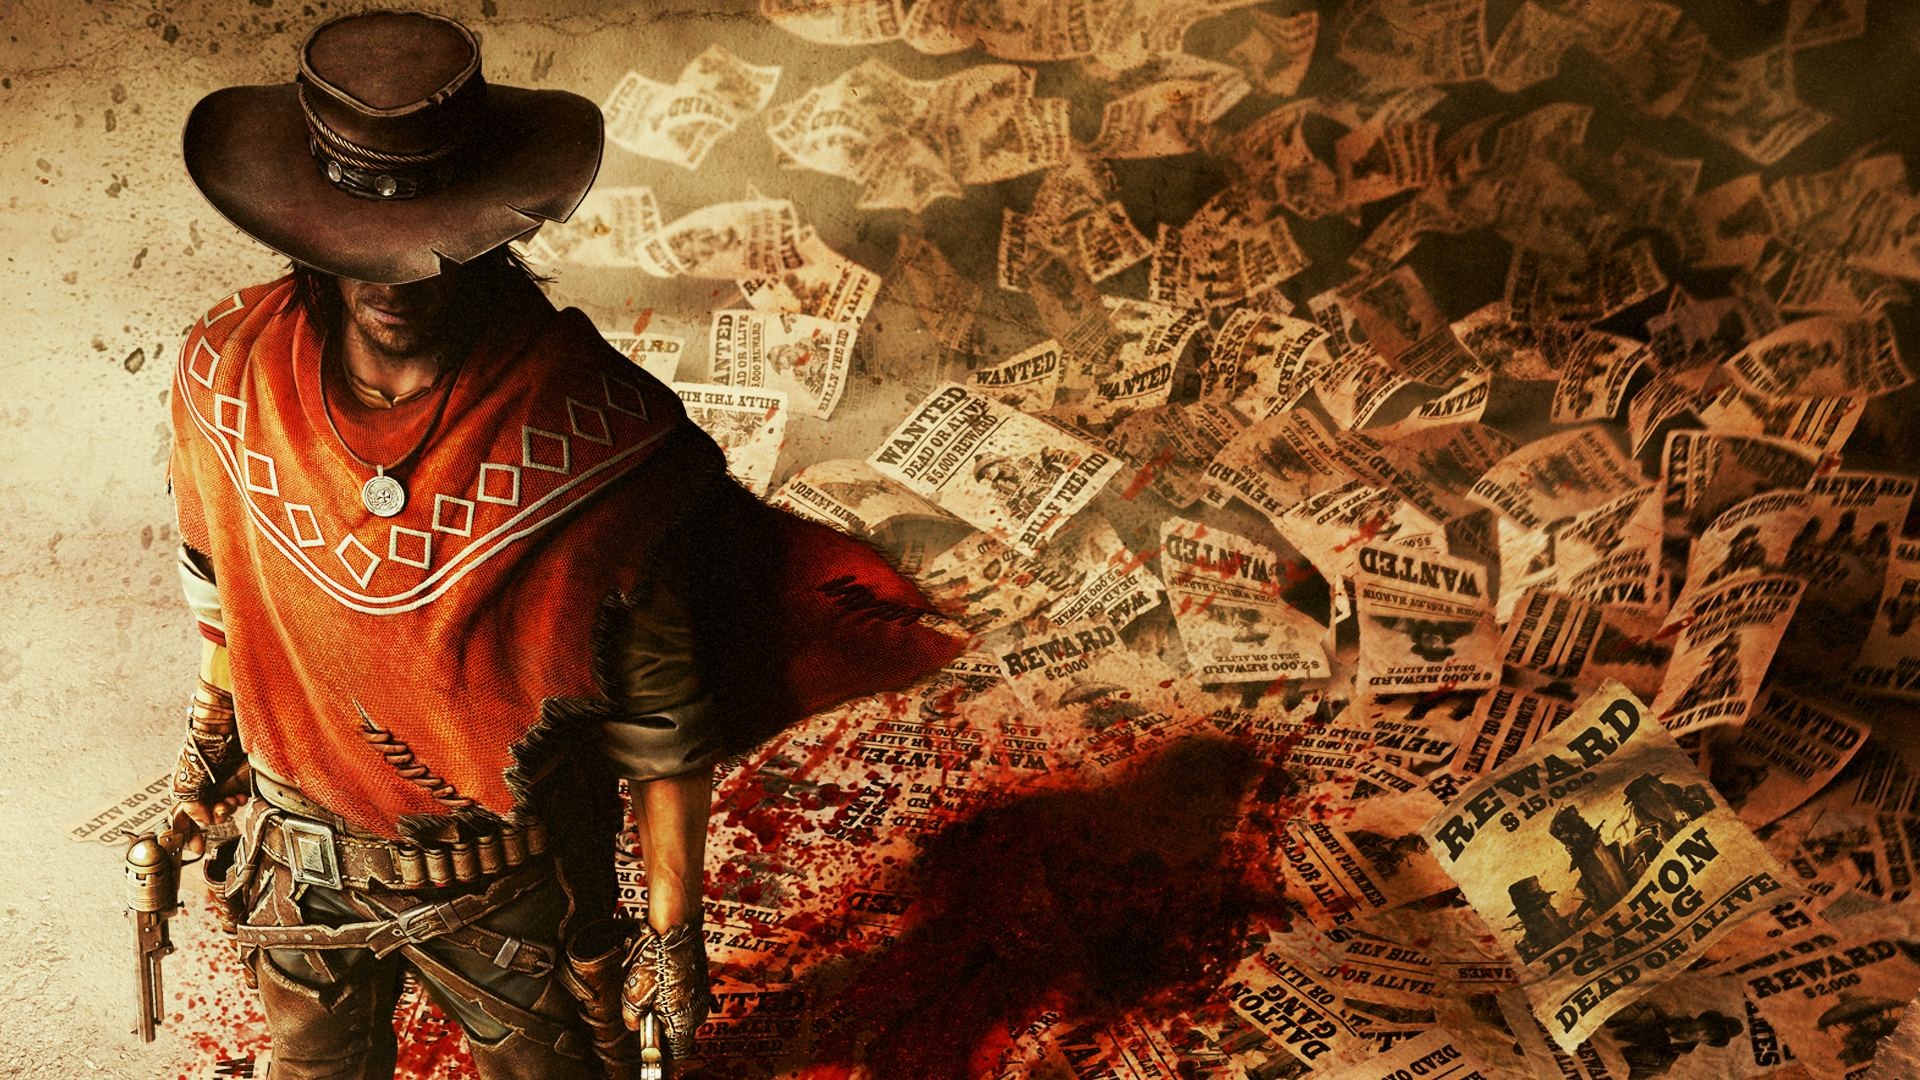 Call Of Juarez: Gunslinger Wallpapers